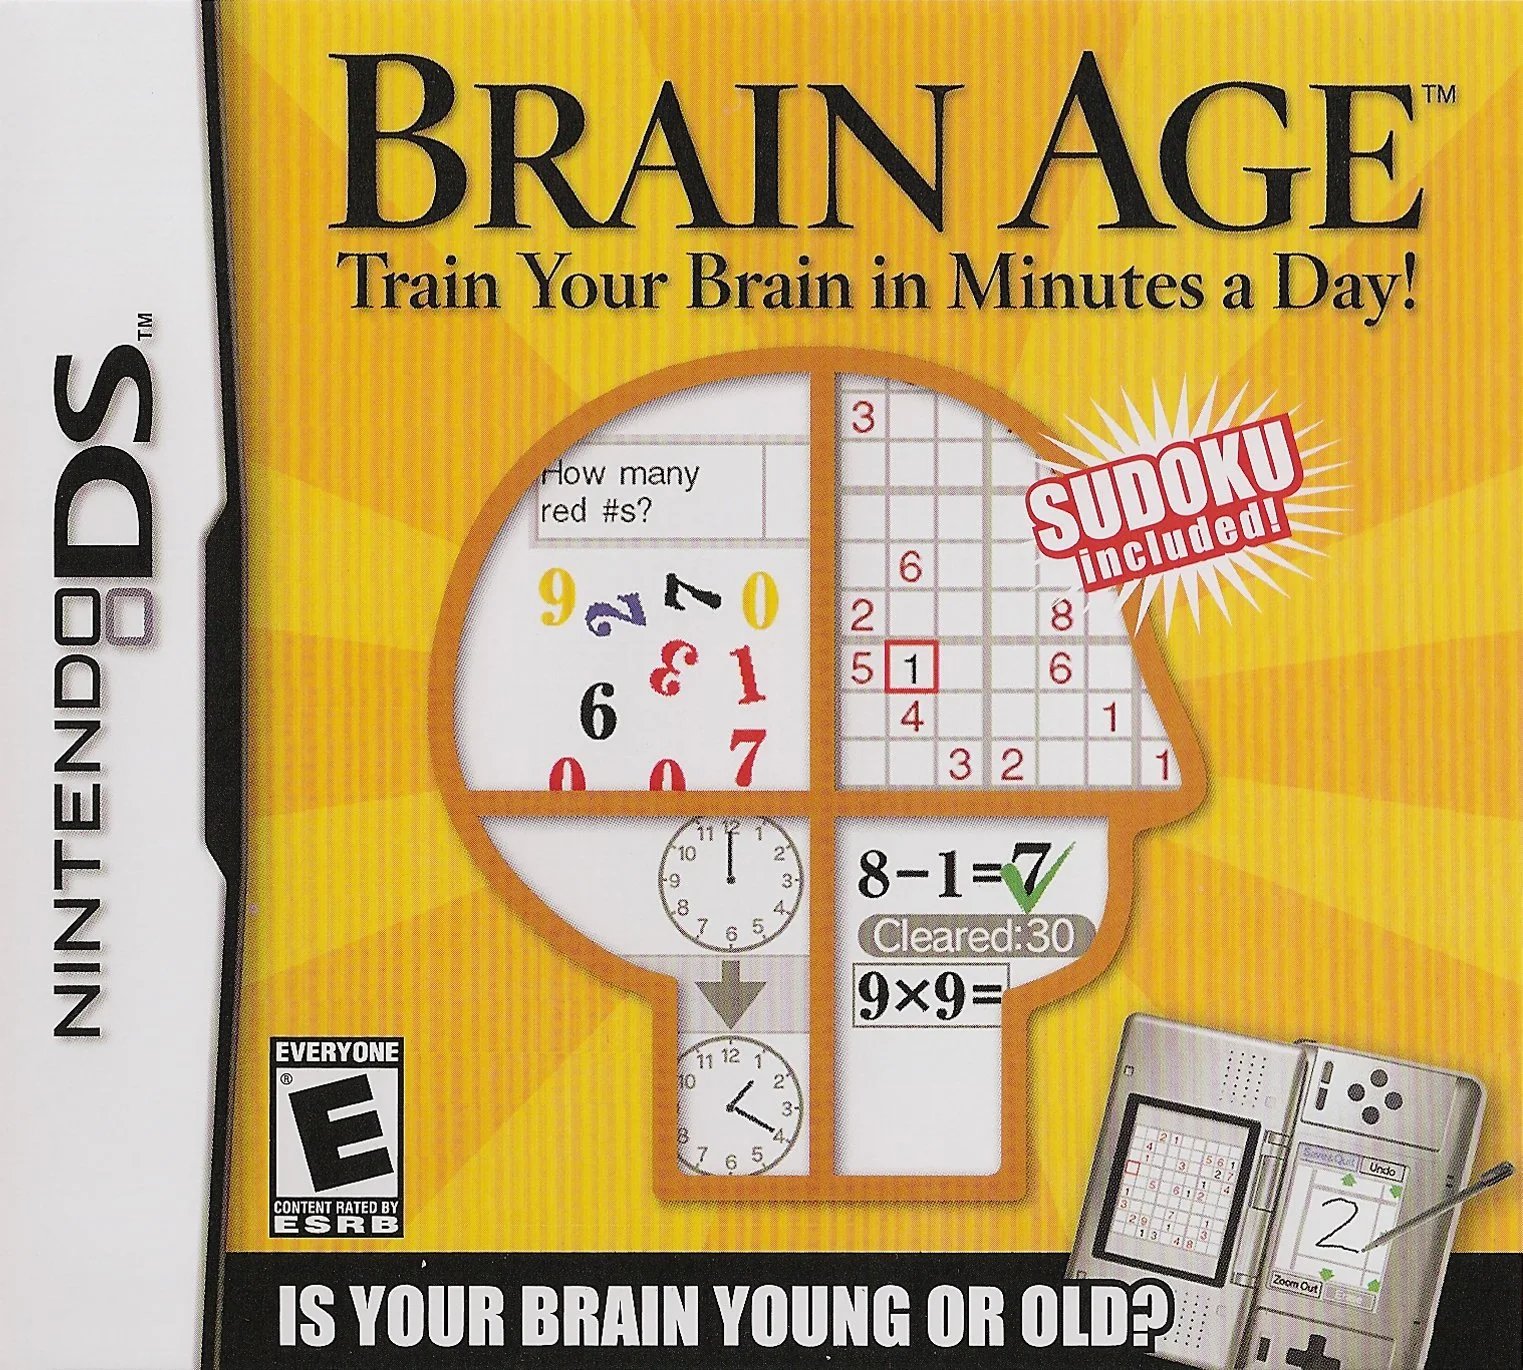 Brain Age